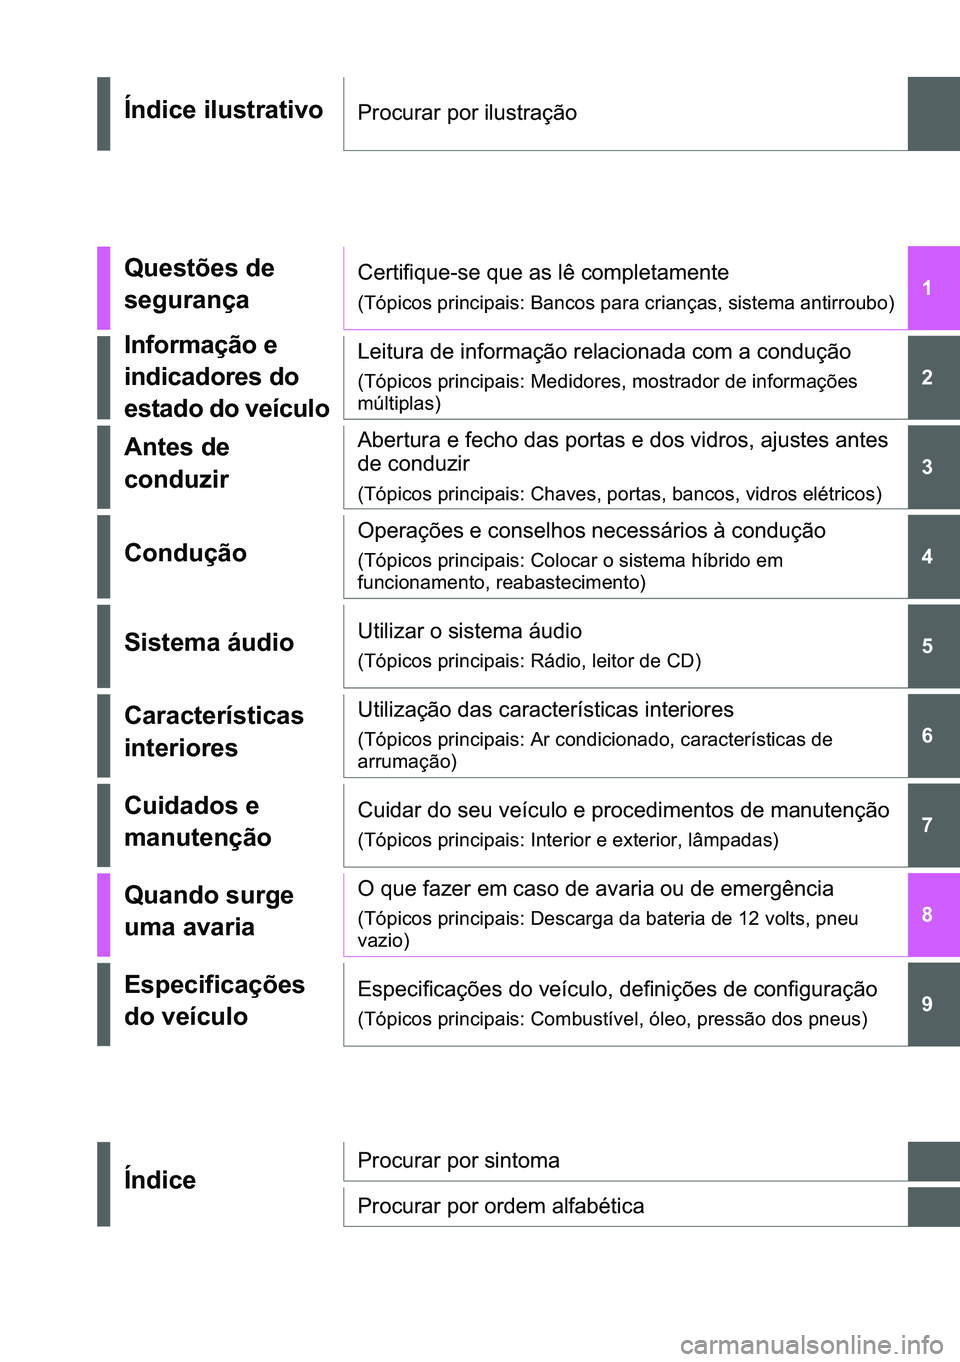 TOYOTA COROLLA 2021  Manual de utilização (in Portuguese) �
� � � � �
� �
�
�&�2�5�2�/�/�$ �+�9 �7�0�0�7 �(�(
�Ë�Q�G�L�F�H��L�O�X�V�W�U�D�W�L�Y�R�3�U�R�F�X�U�D�U��S�R�U��L�O�X�V�W�U�D�o�m�R
�4�X�H�V�W�}�H�V��G�H�
�V�H�J�X�U�D�Q�o�D�&�H�U�W�L�I